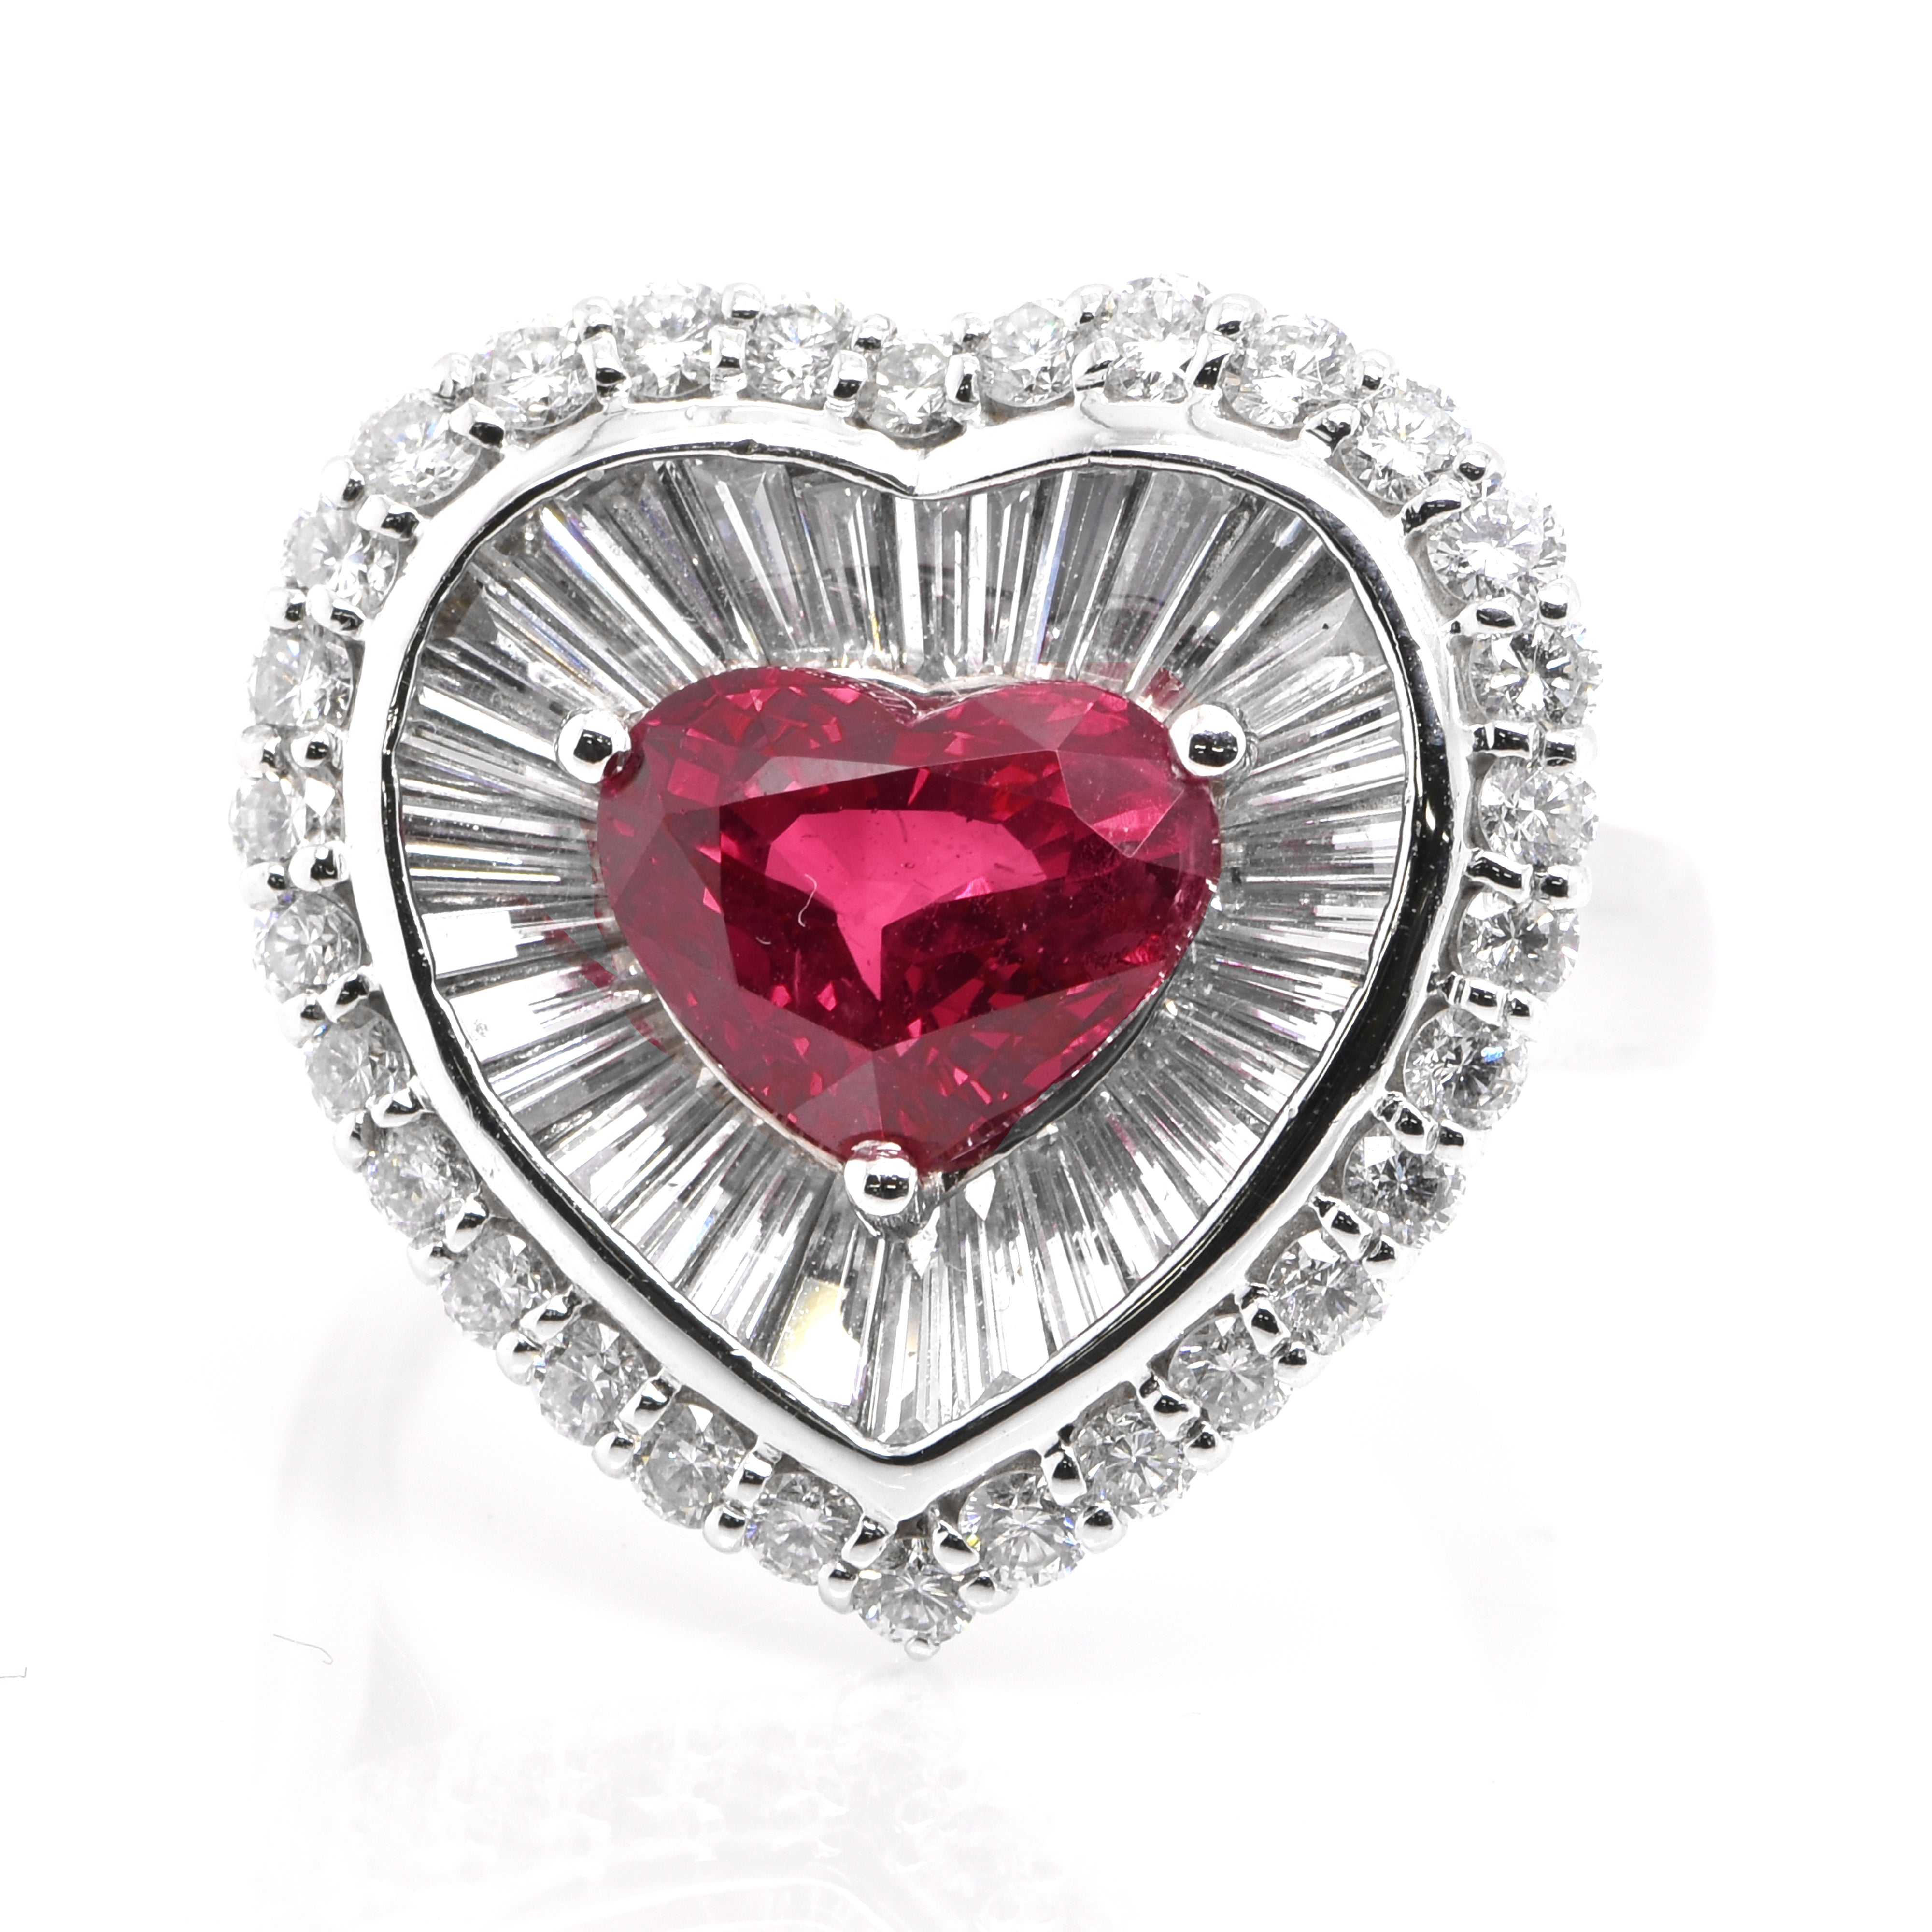 3.02 Carat Natural Heart-Cut Burmese Ruby and Diamond set in Platinum